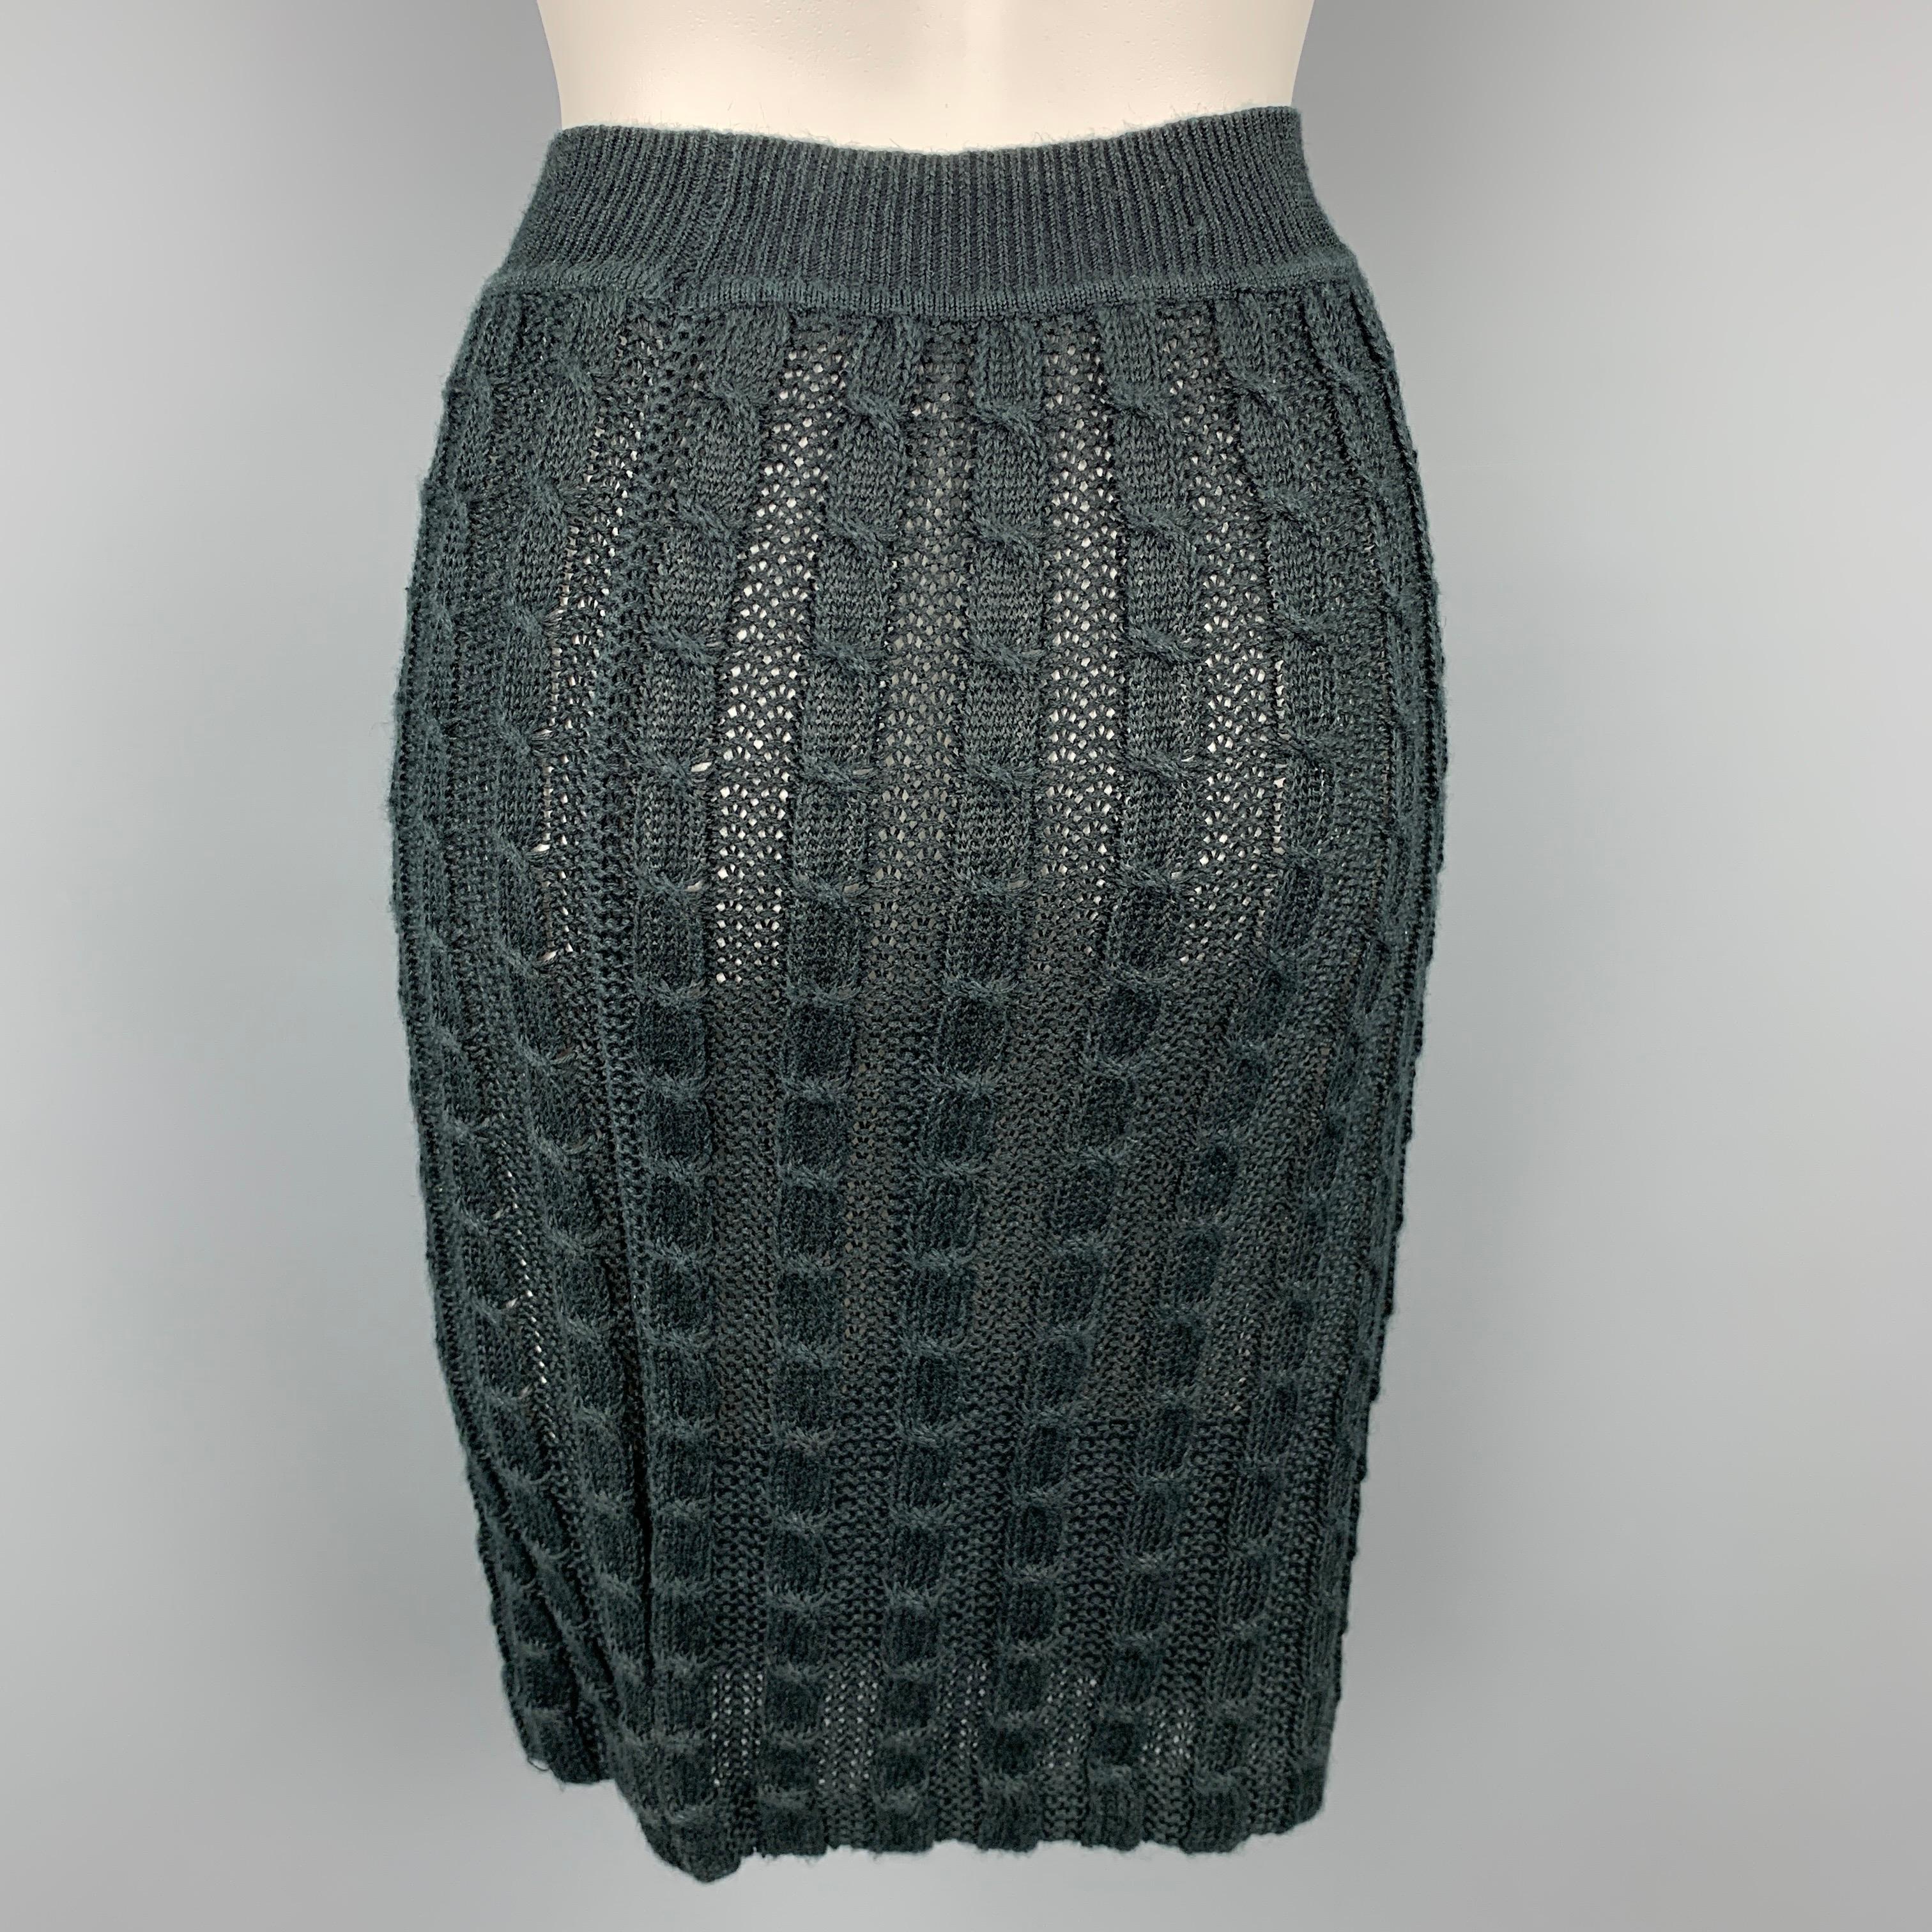 Black JUNKO SHIMADA Size M Charcoal Knitted Linen Pencil Skirt Set